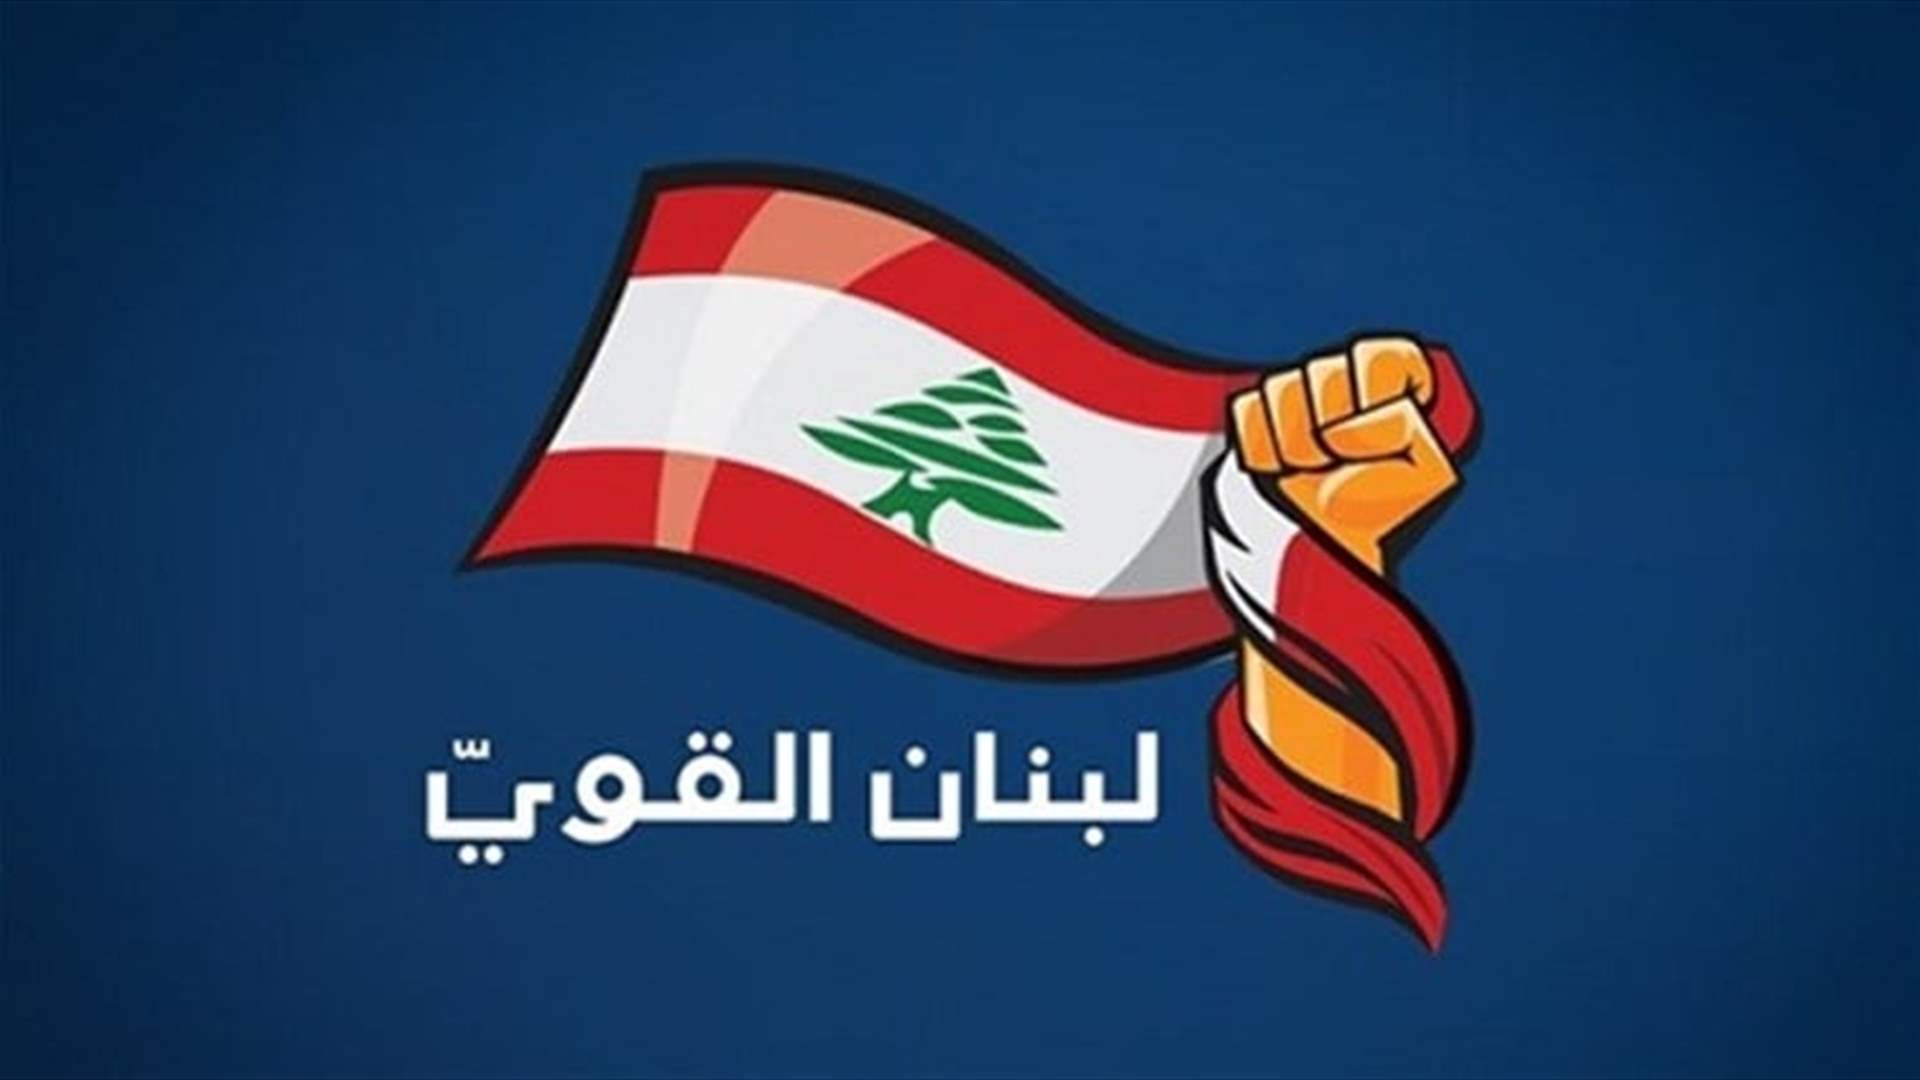 &quot;لبنان القوي&quot; قدم إقتراح قانون لتعيين محقق خاص بالقضايا المالية